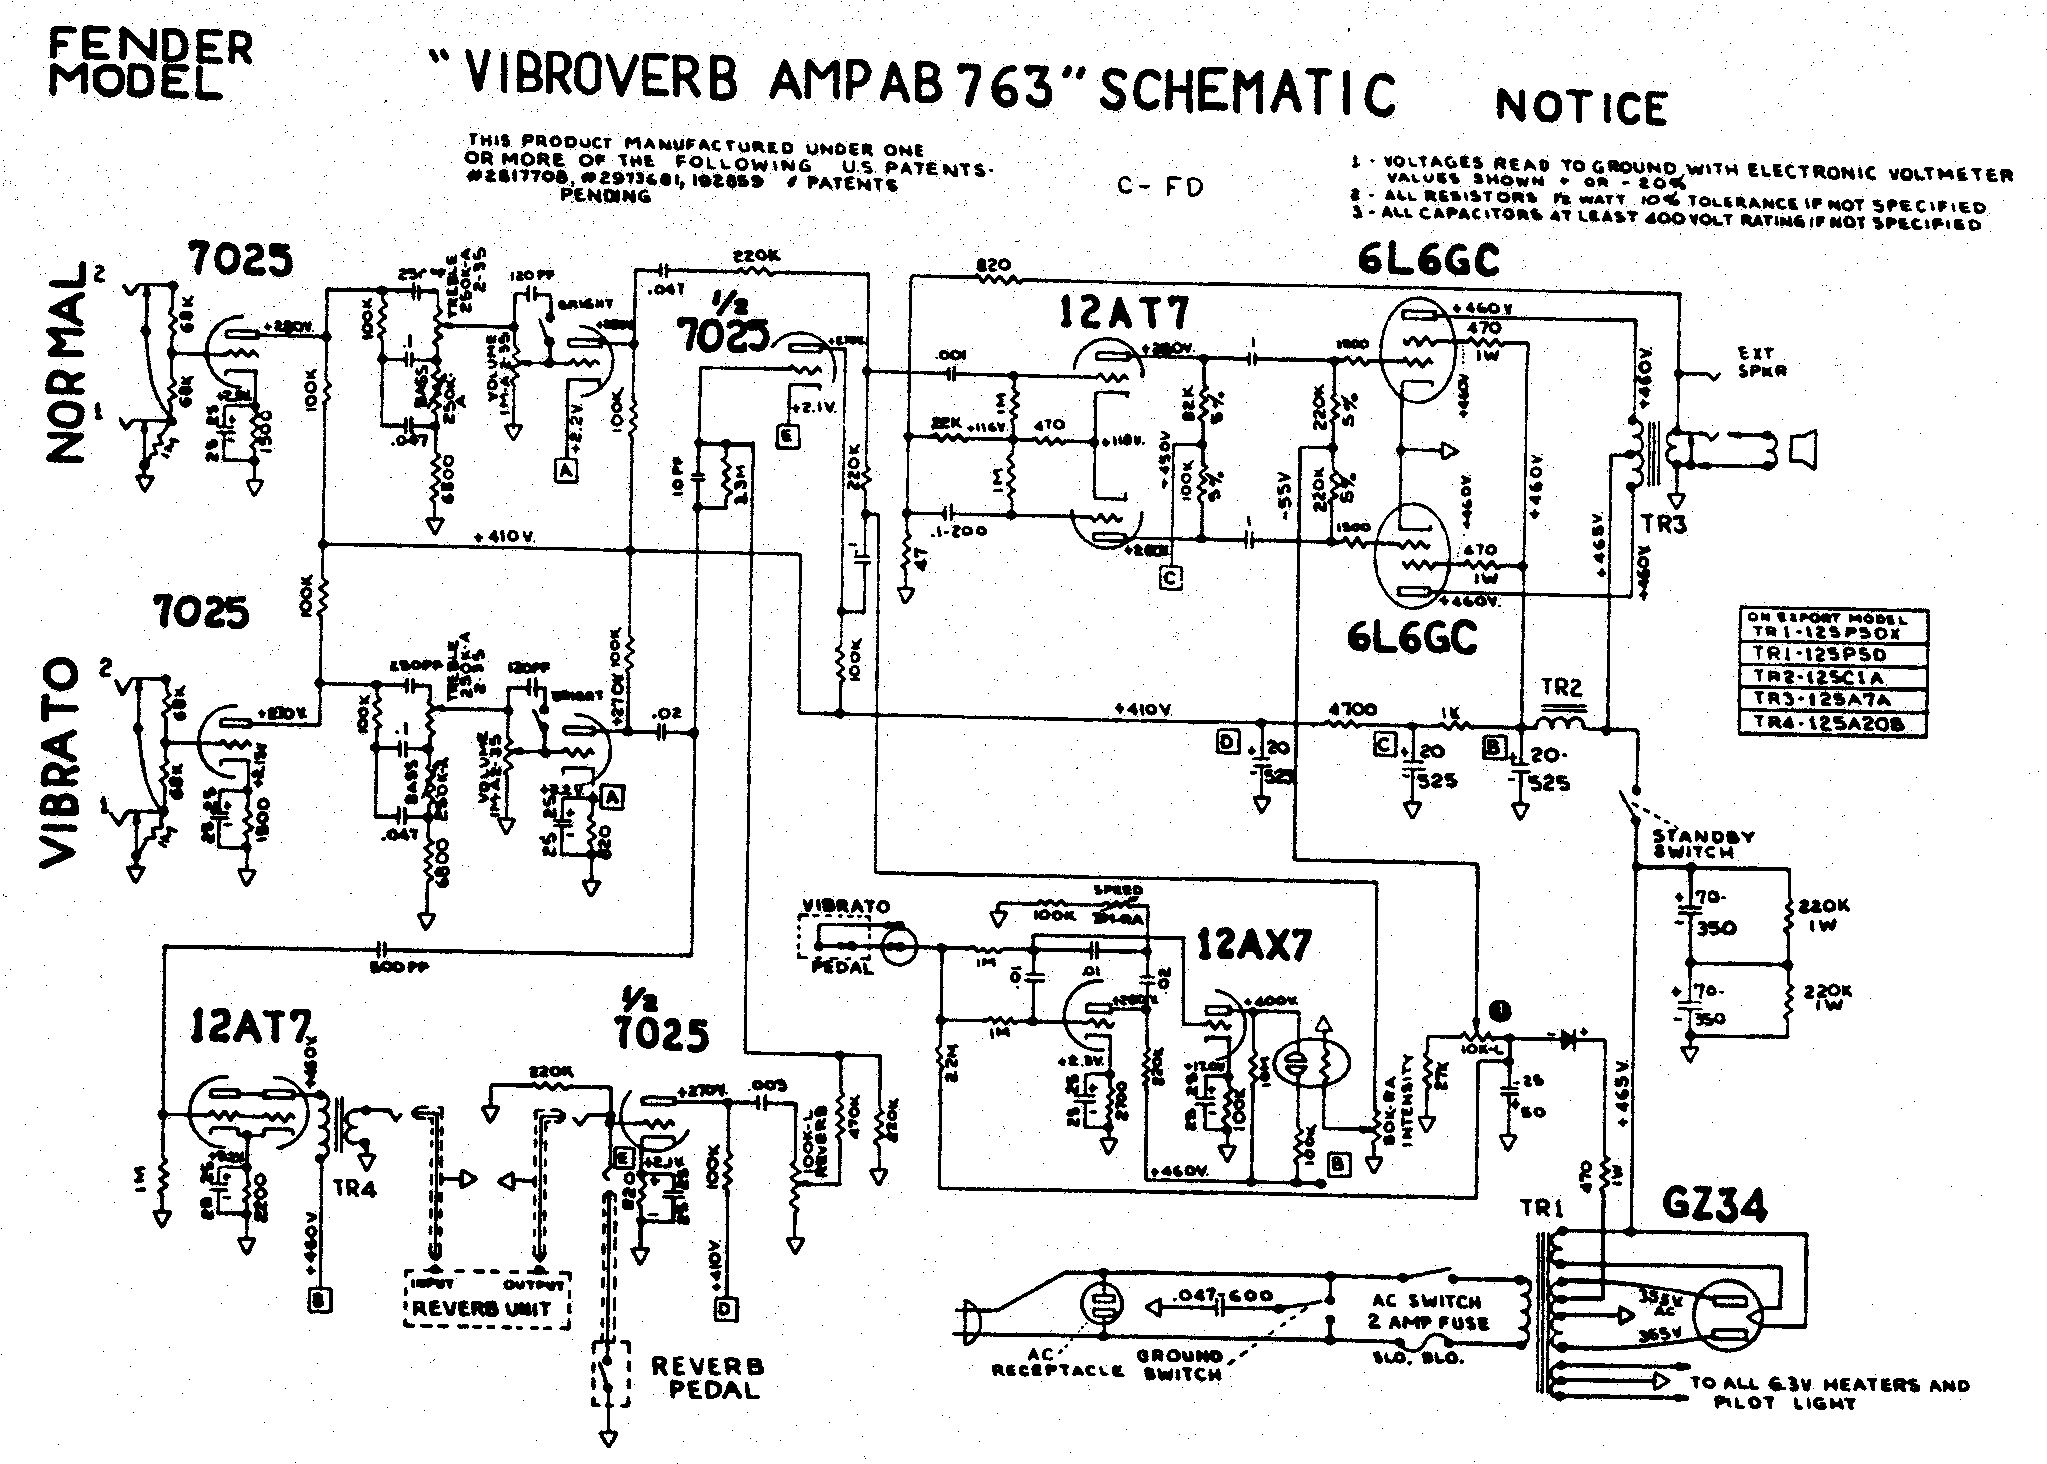 Схема Fender - Vibroverb Amp AB763